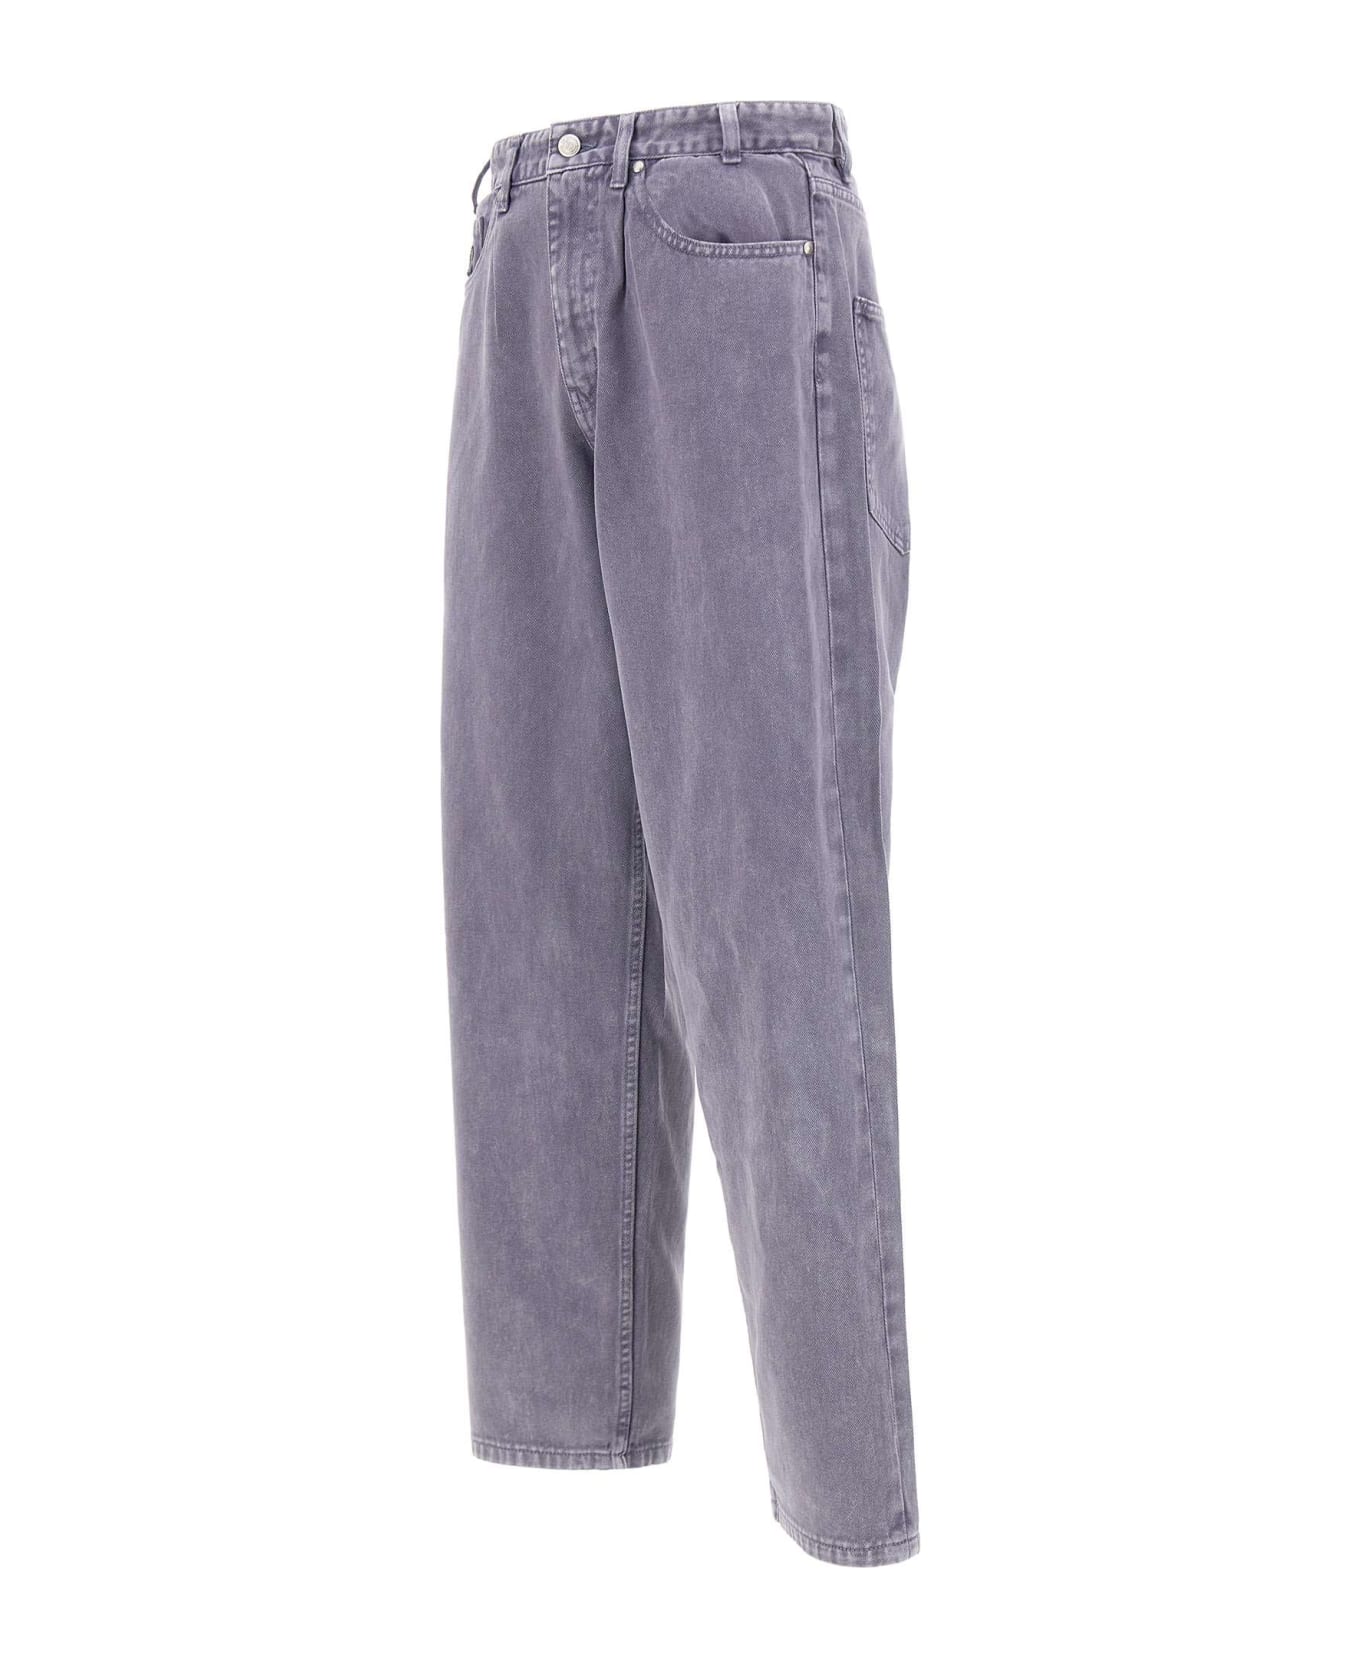 HUF 'cromer Washed Pant' Jeans - Grey